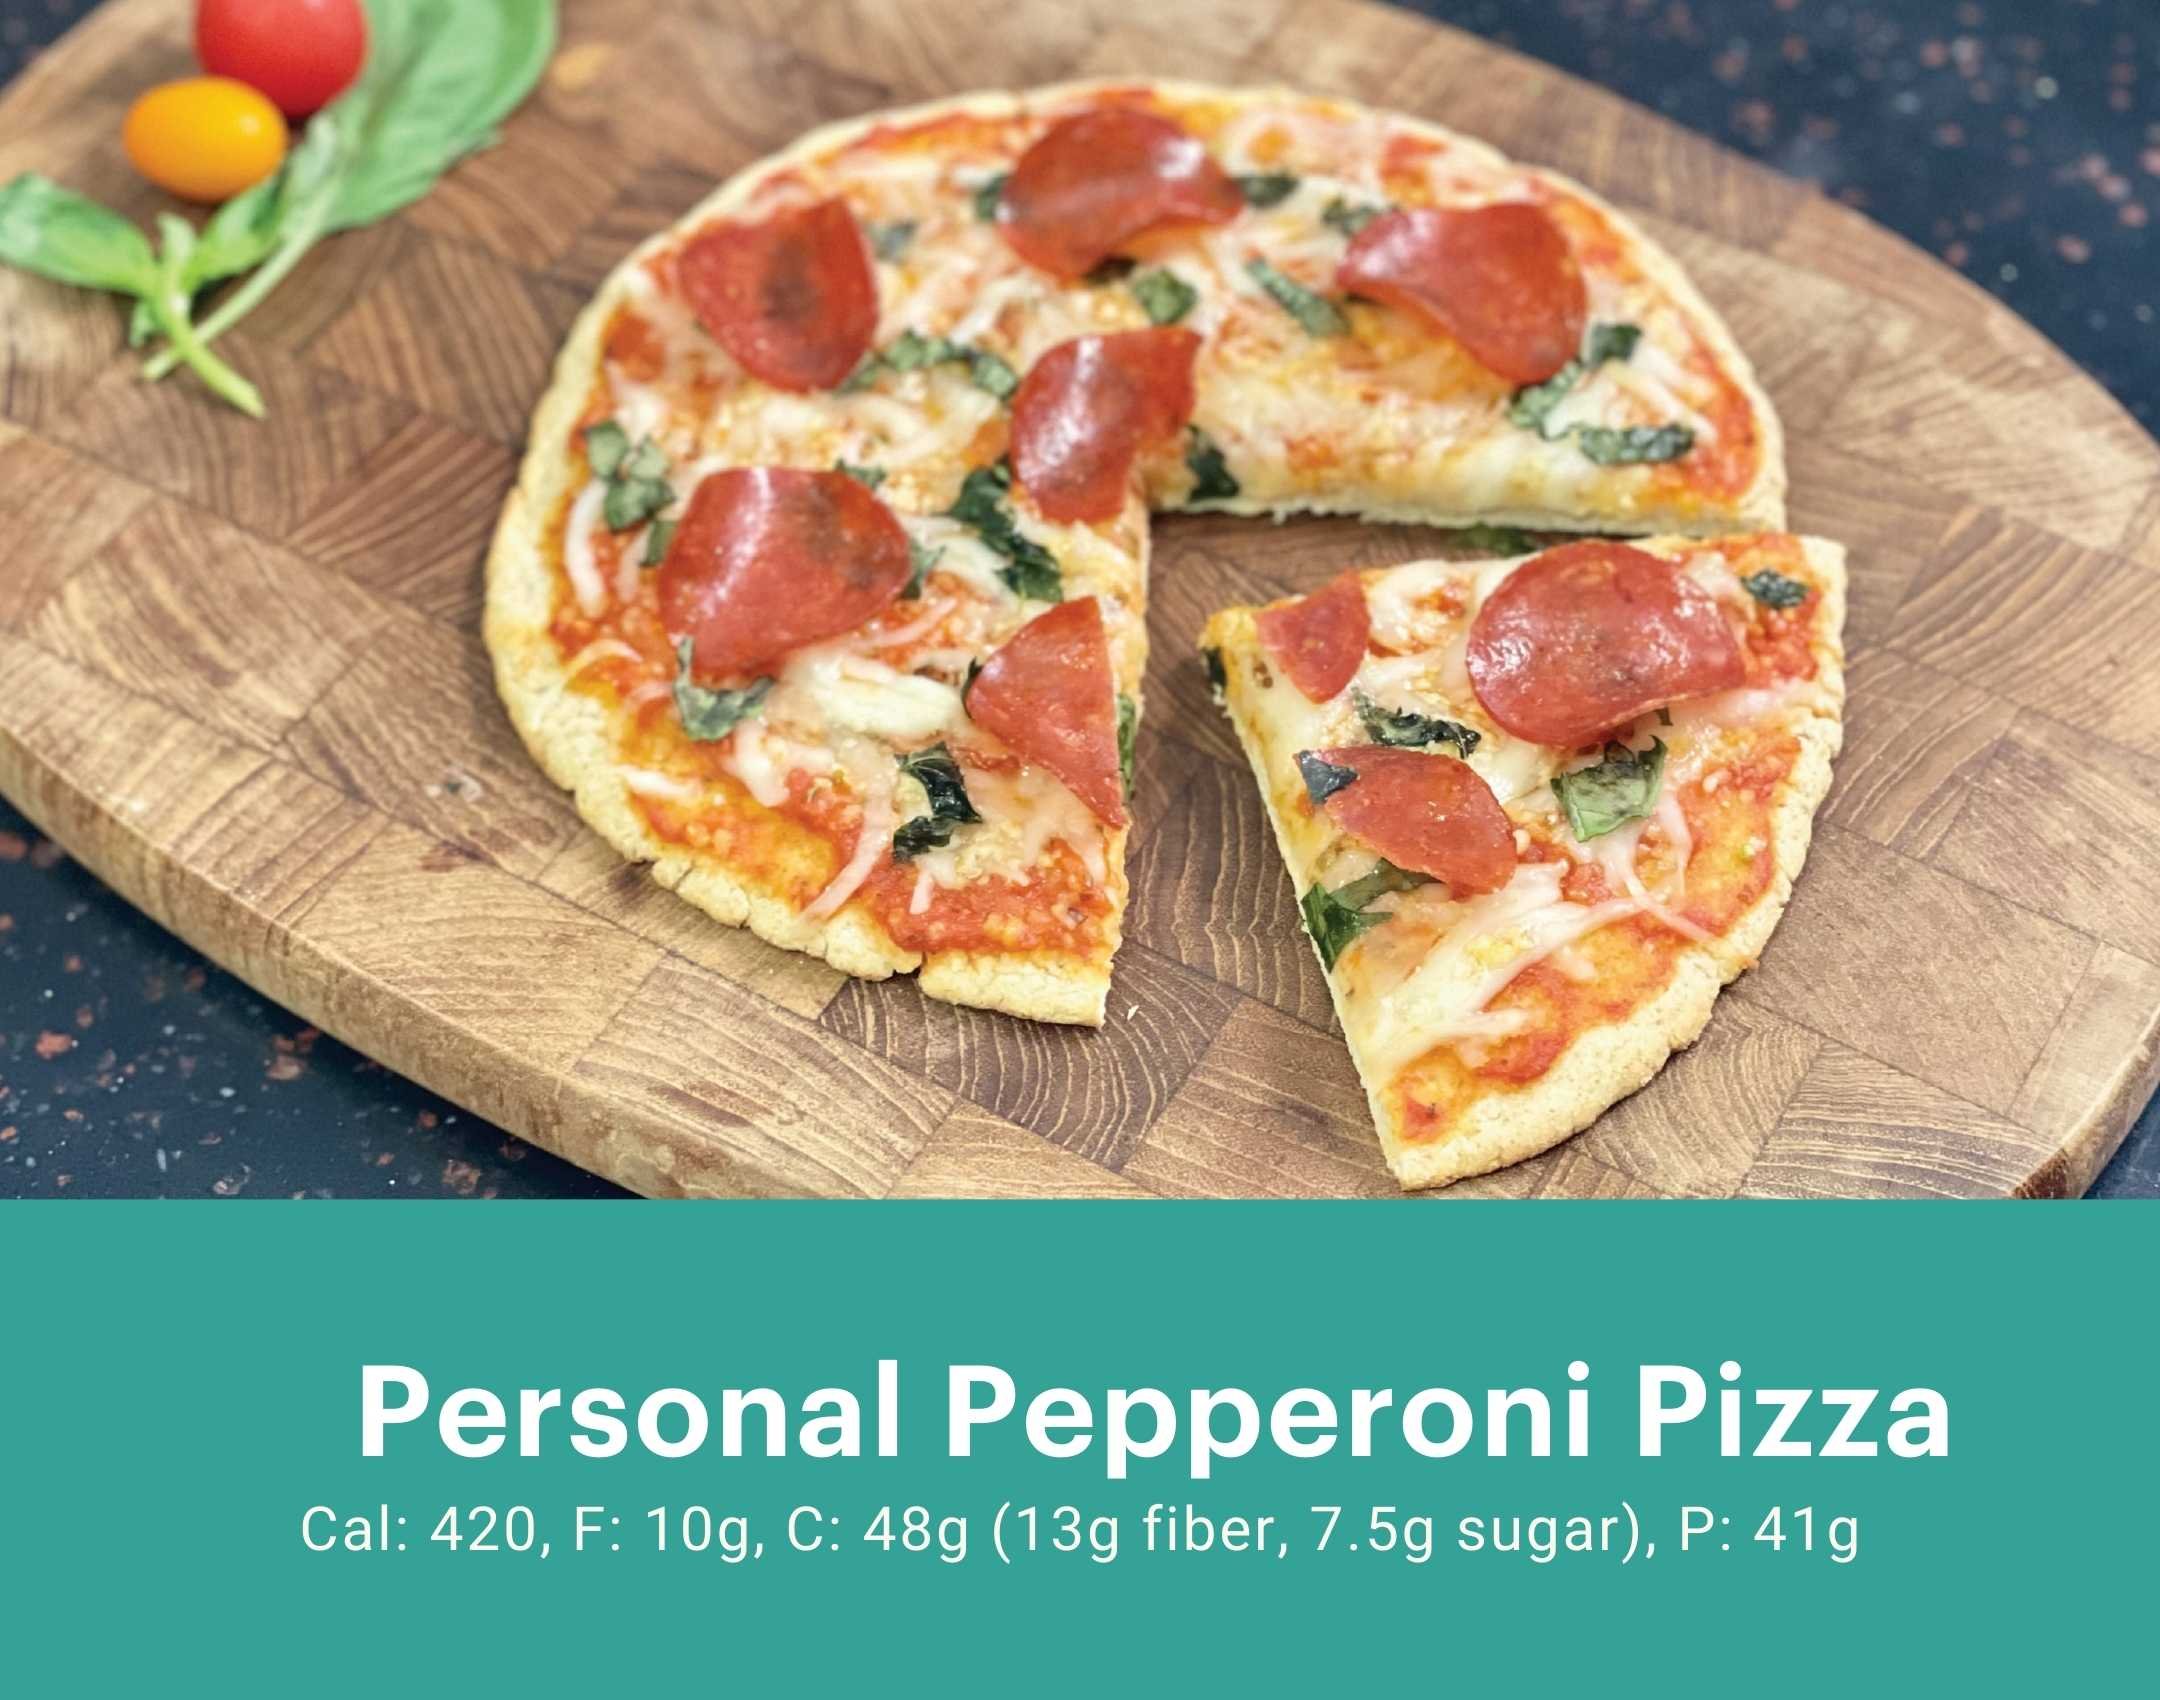 Personal Pepperoni Pizza.jpg